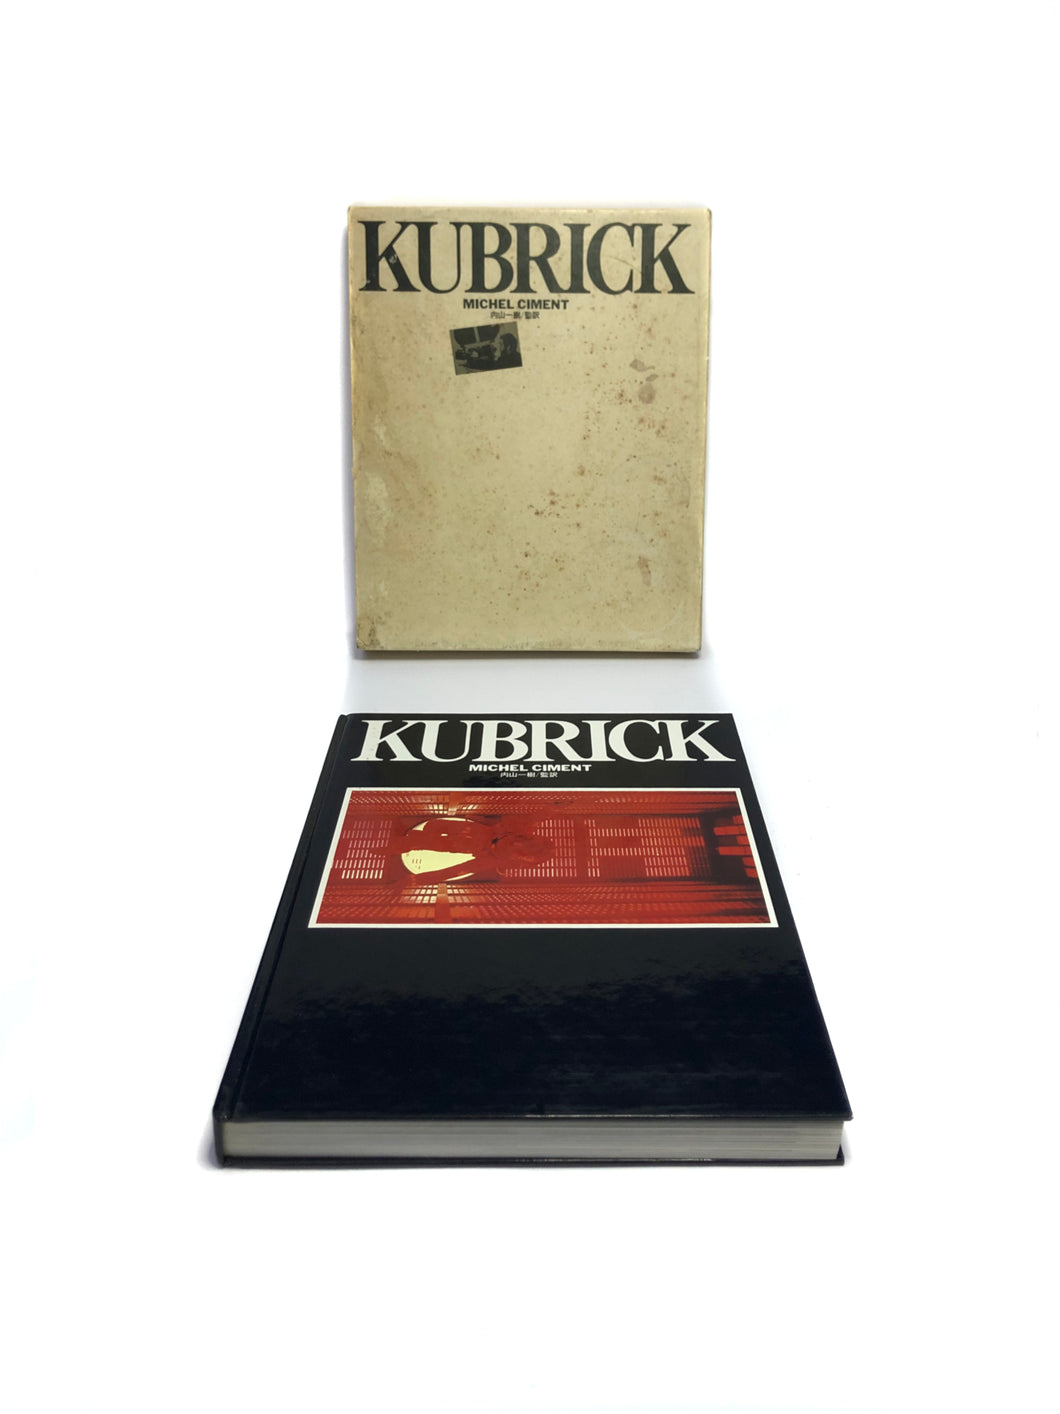 Kubrick by Michel Ciment 1989